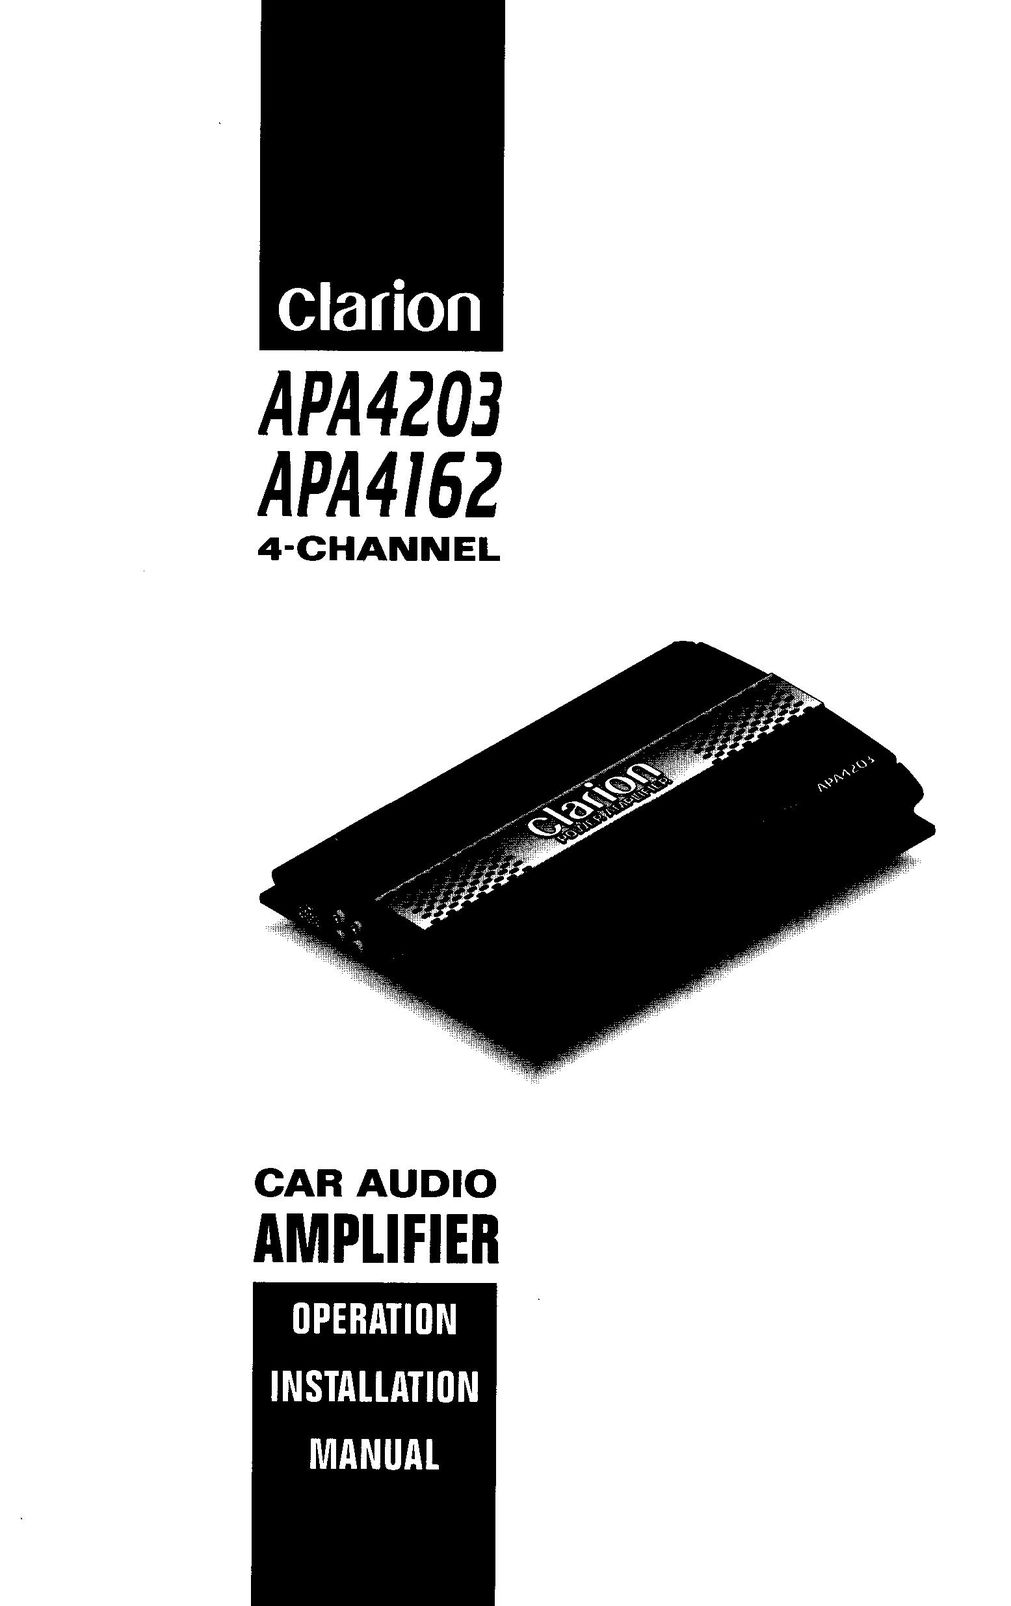 Clarion APA4203 Car Amplifier User Manual